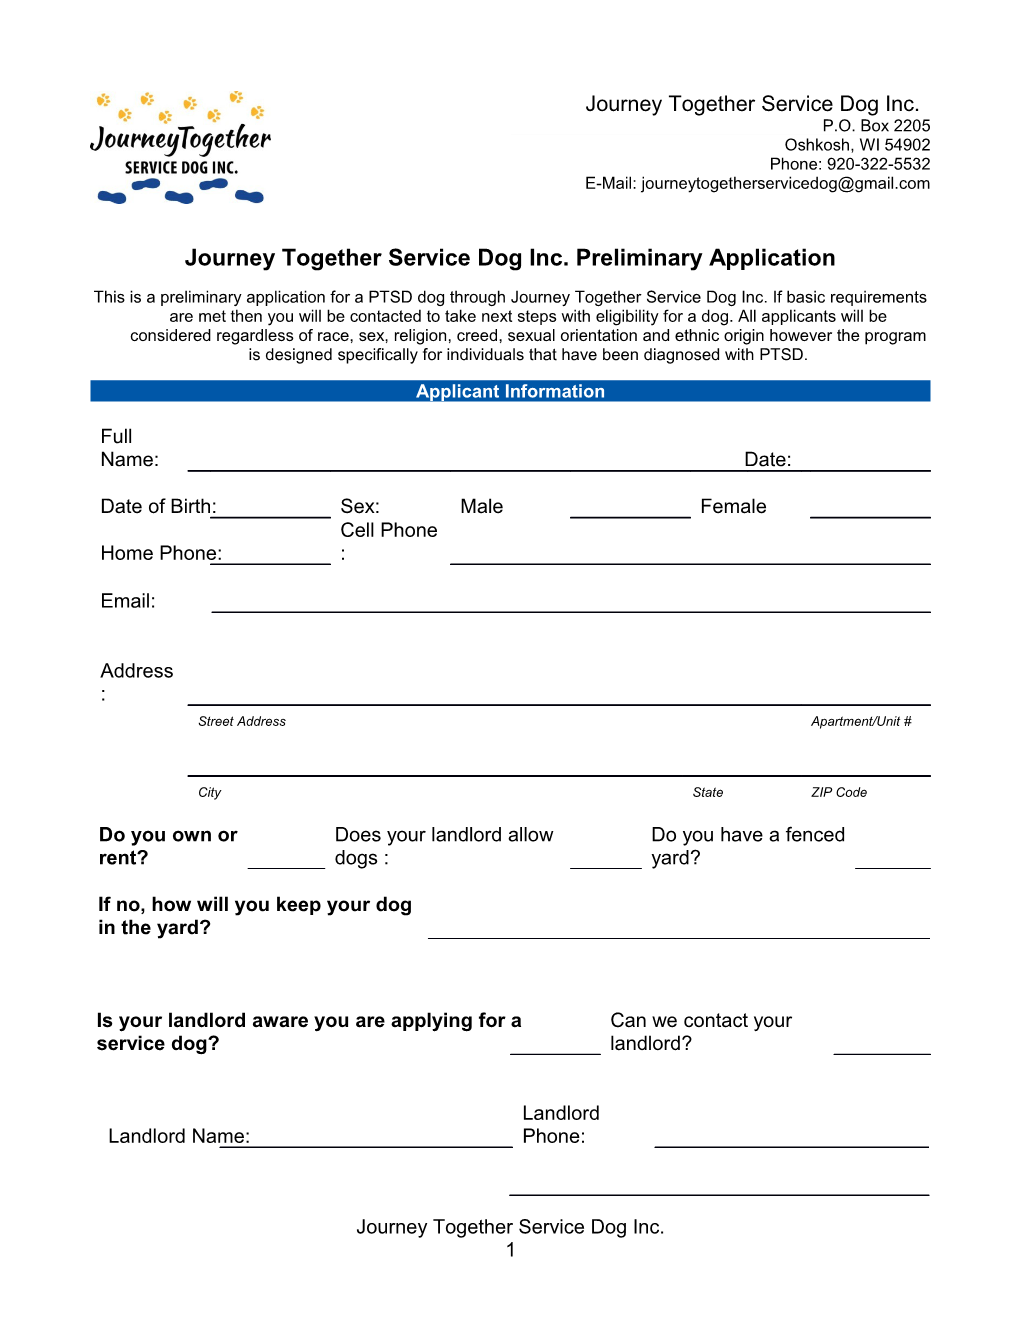 Journey Together Service Dog Inc.Preliminary Application